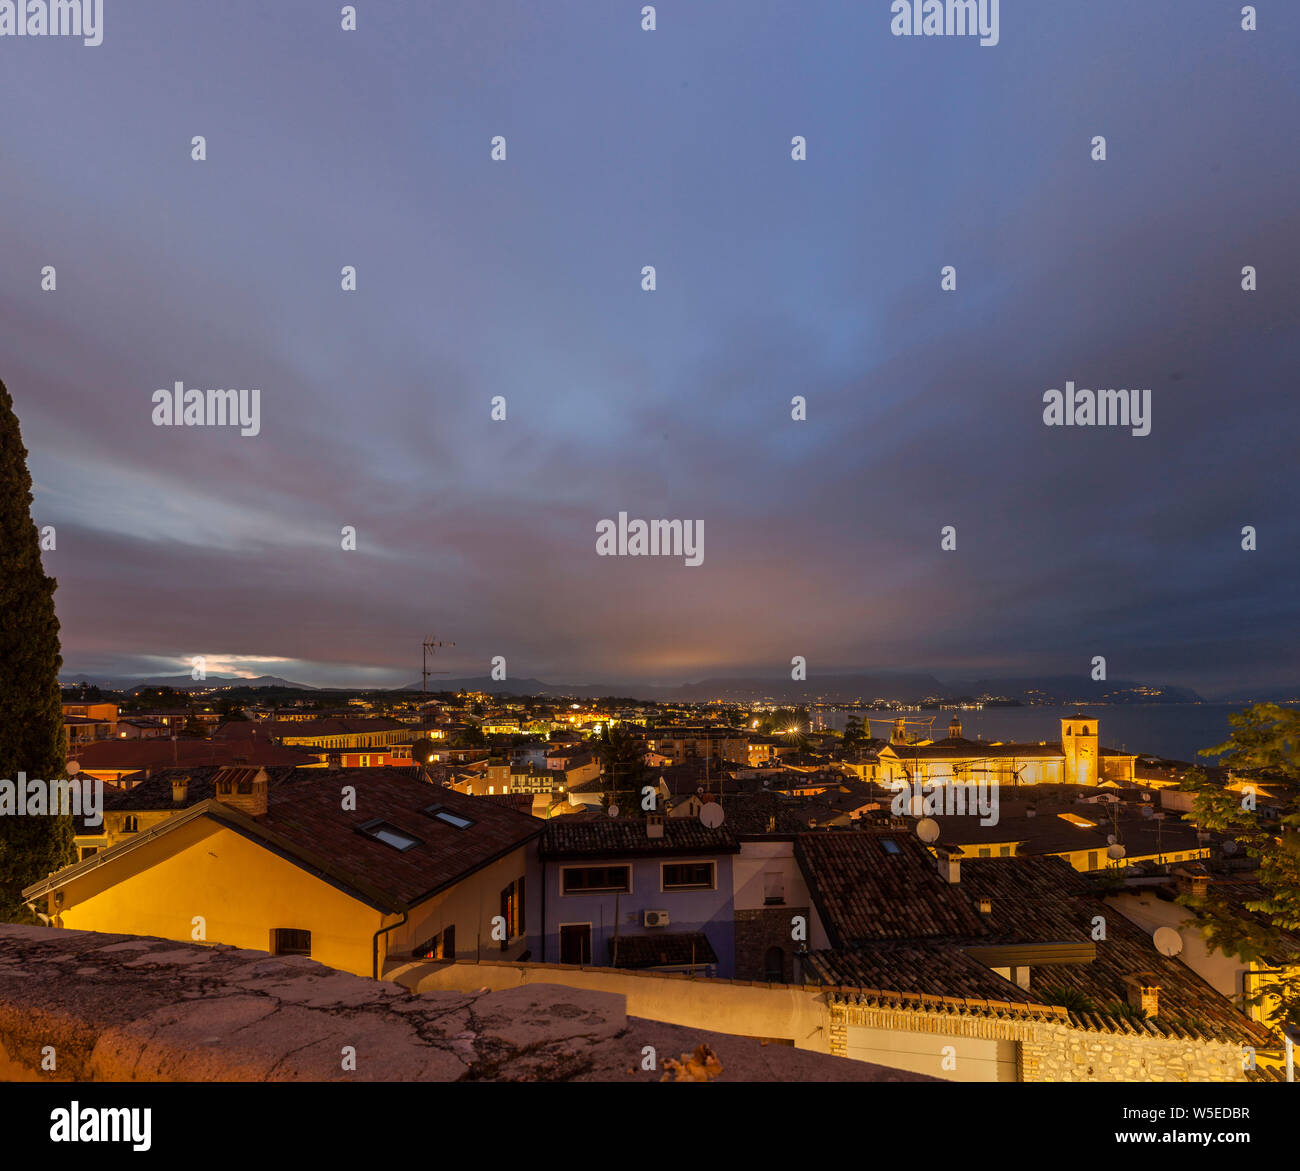 View of Desenzano at night.Skyline of Desenzano del Garda,Italy Stock Photo